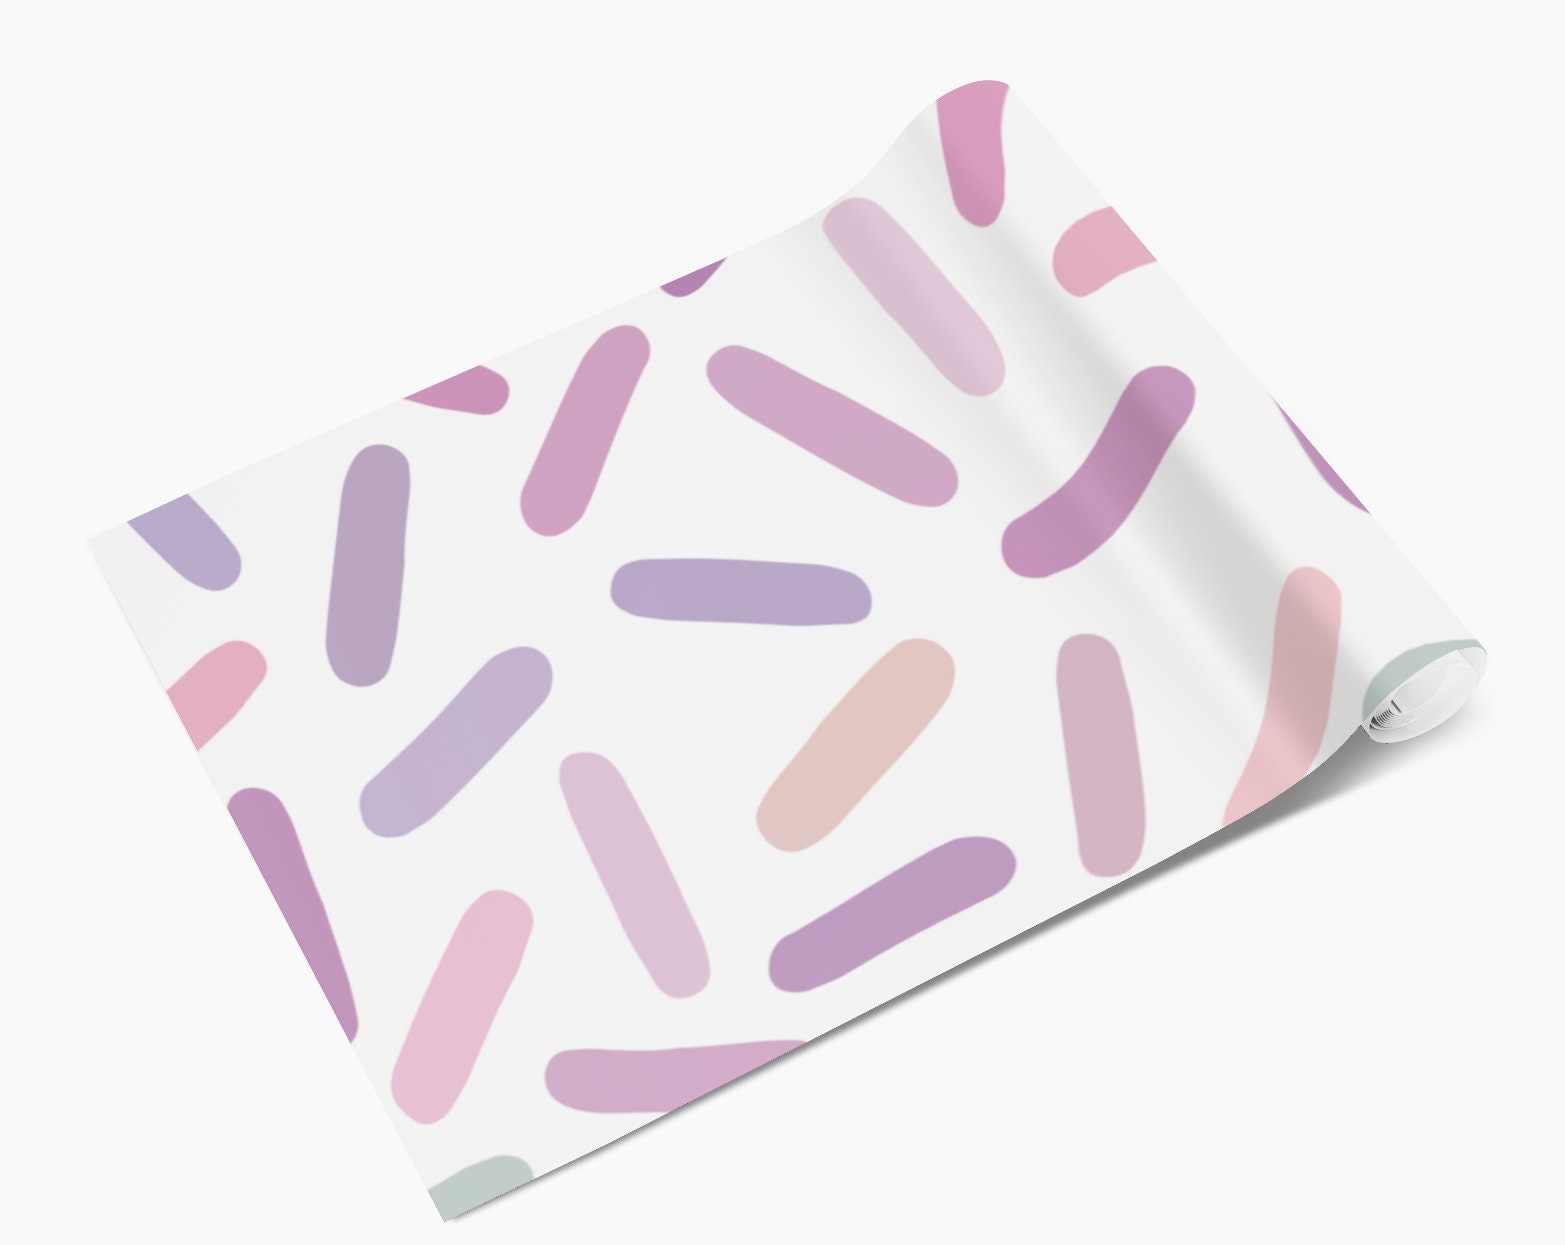 Colour Sprinkles Confetti Vinyl Wrap